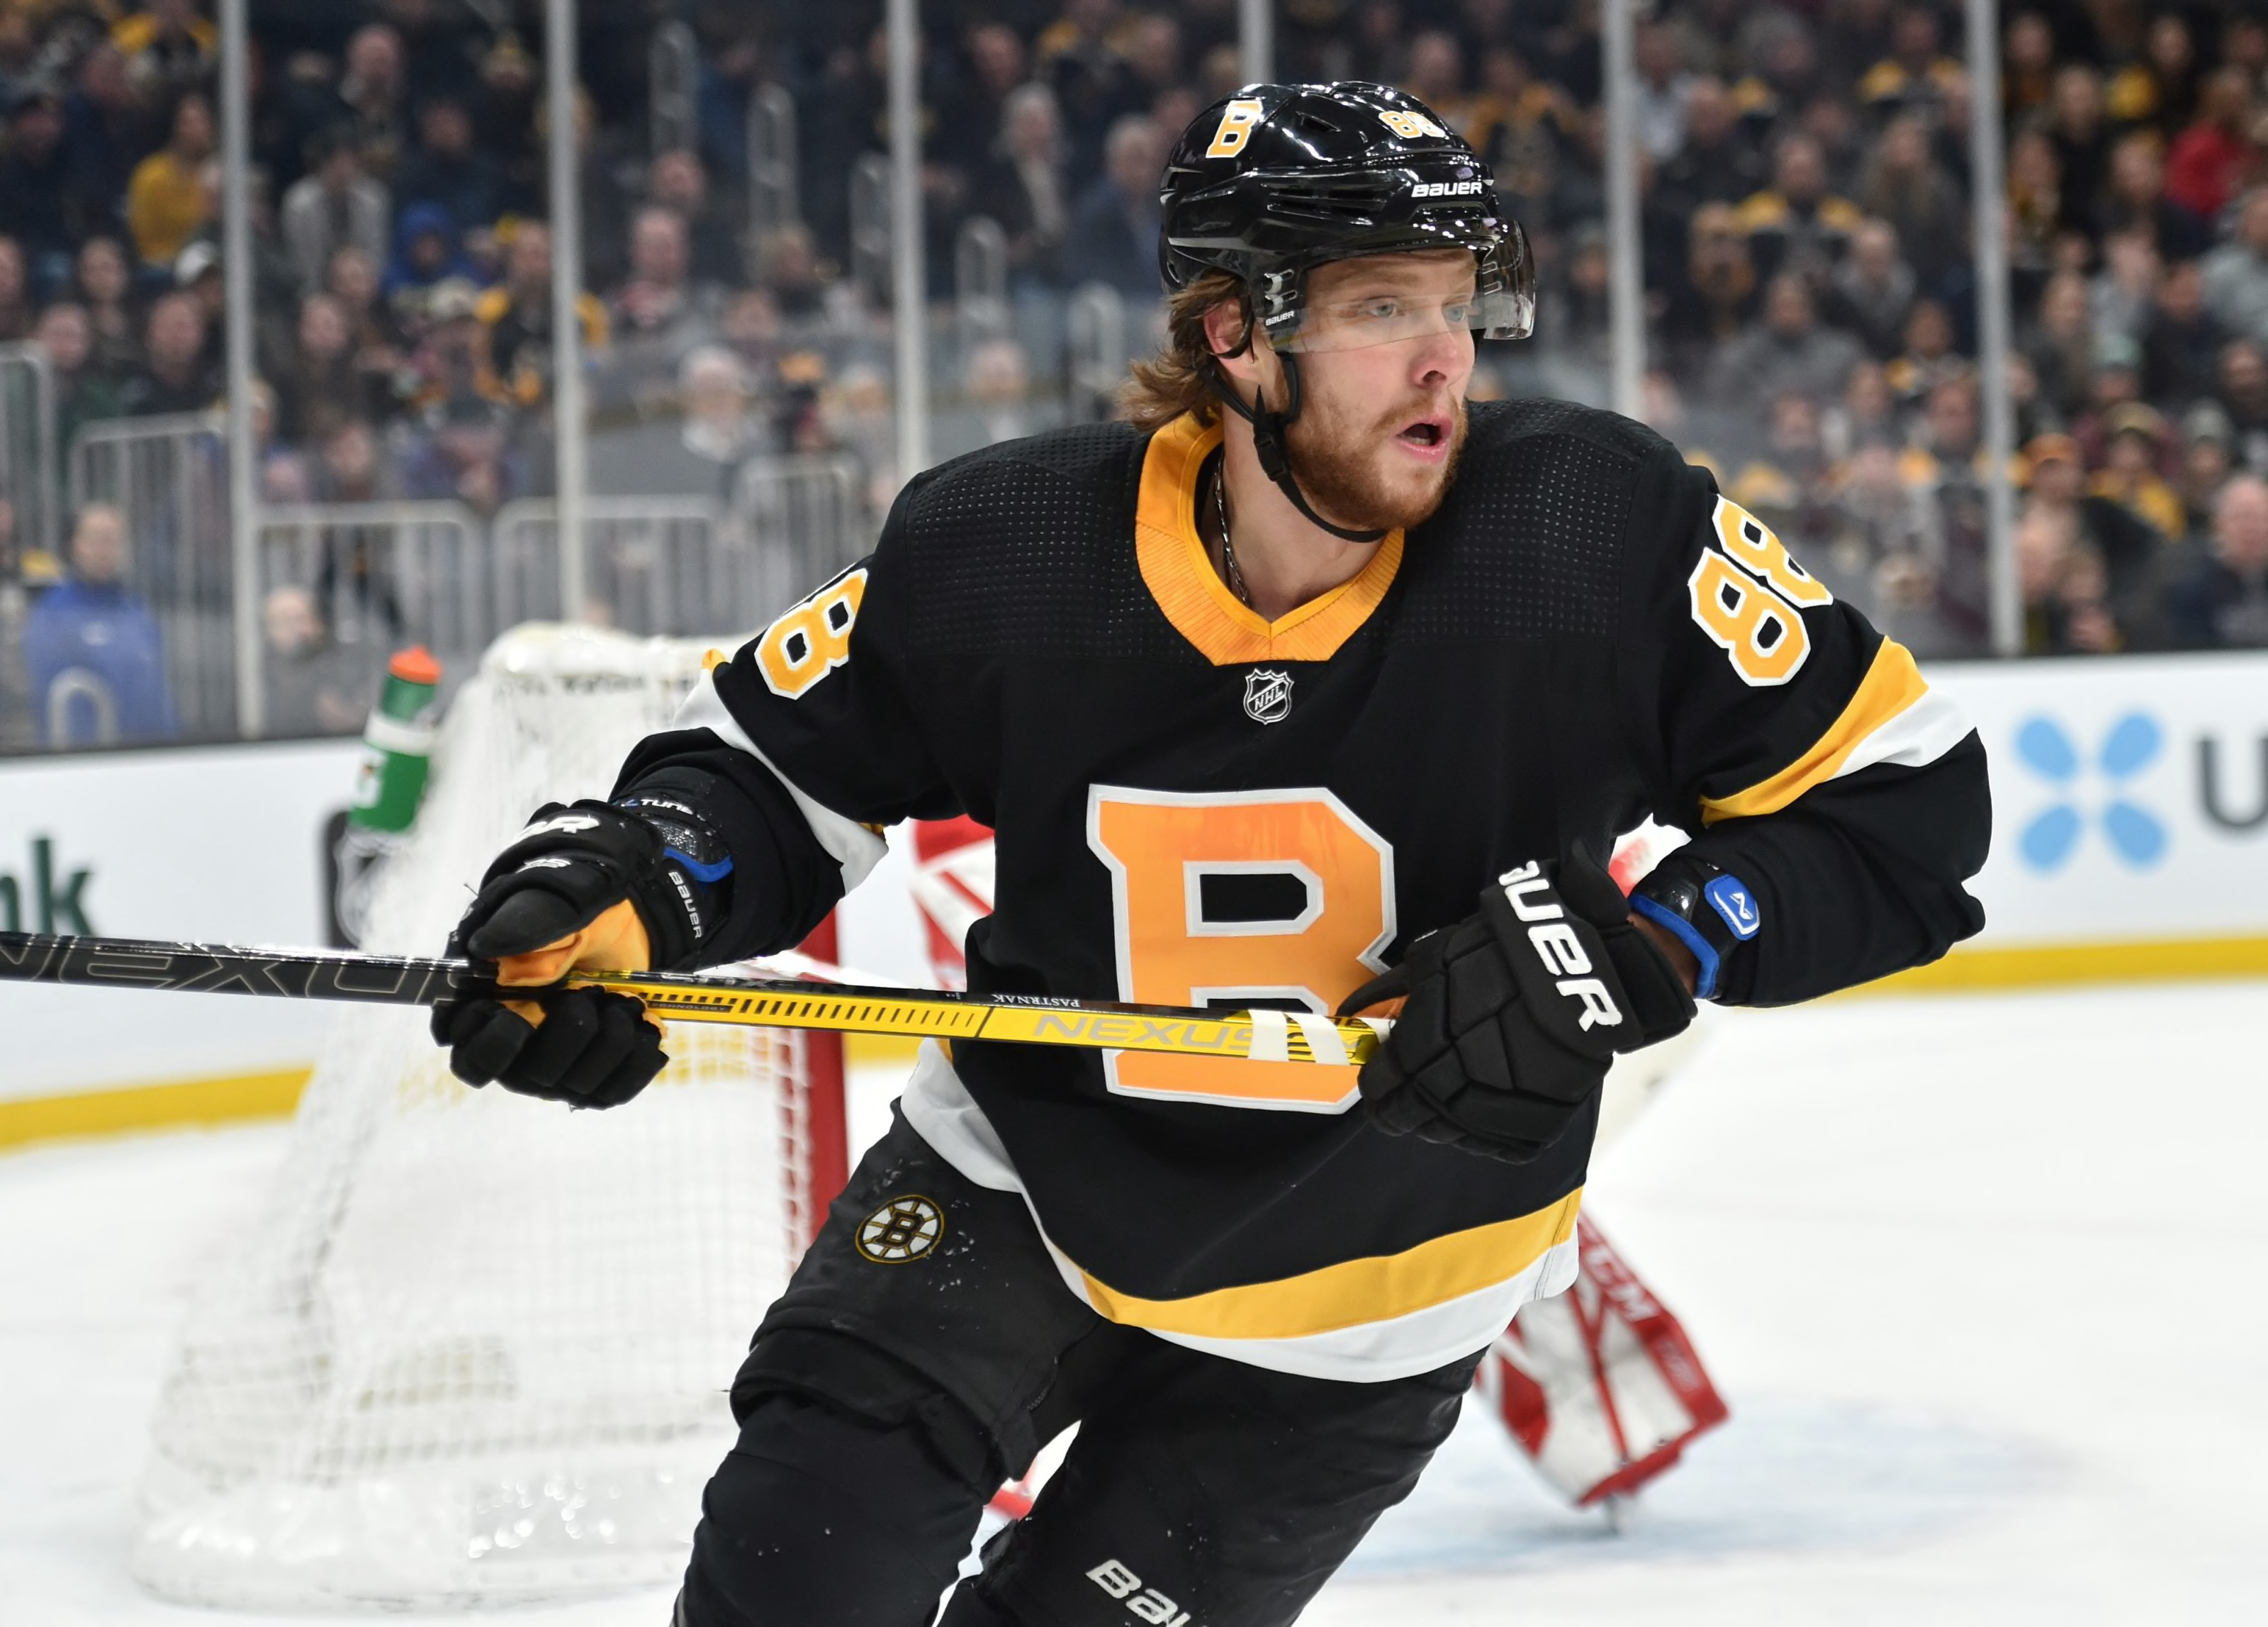 Big Read: How Bruins sniper Pastrnak rose to NHL stardom